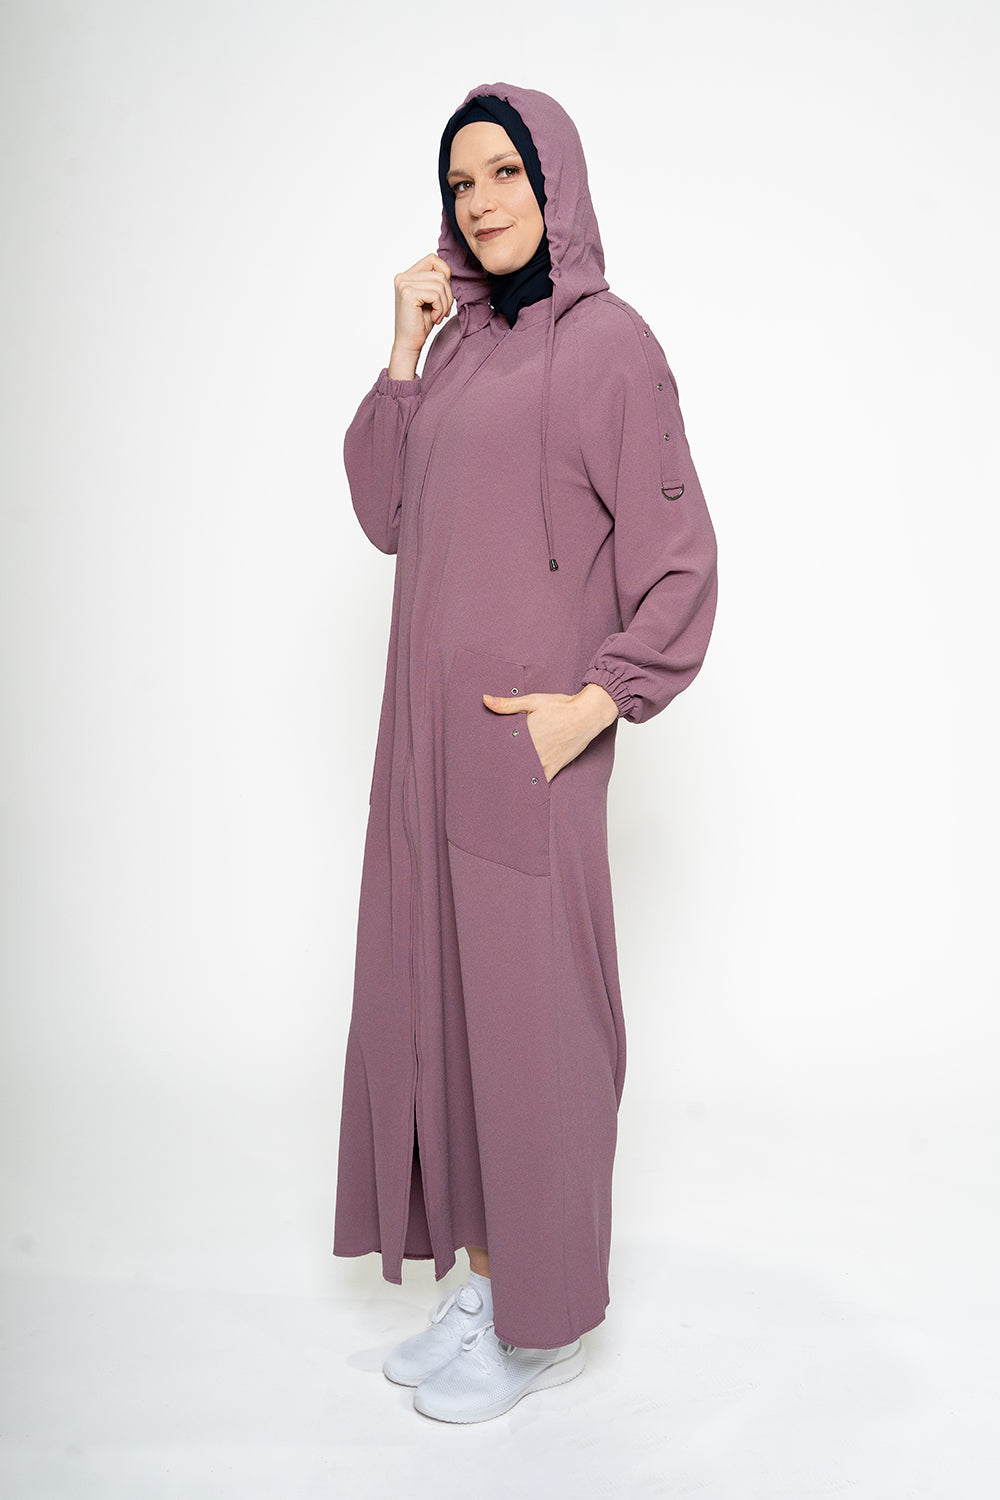 Practical Pocketed Modest Turkish Jilbab | Dana Fashion